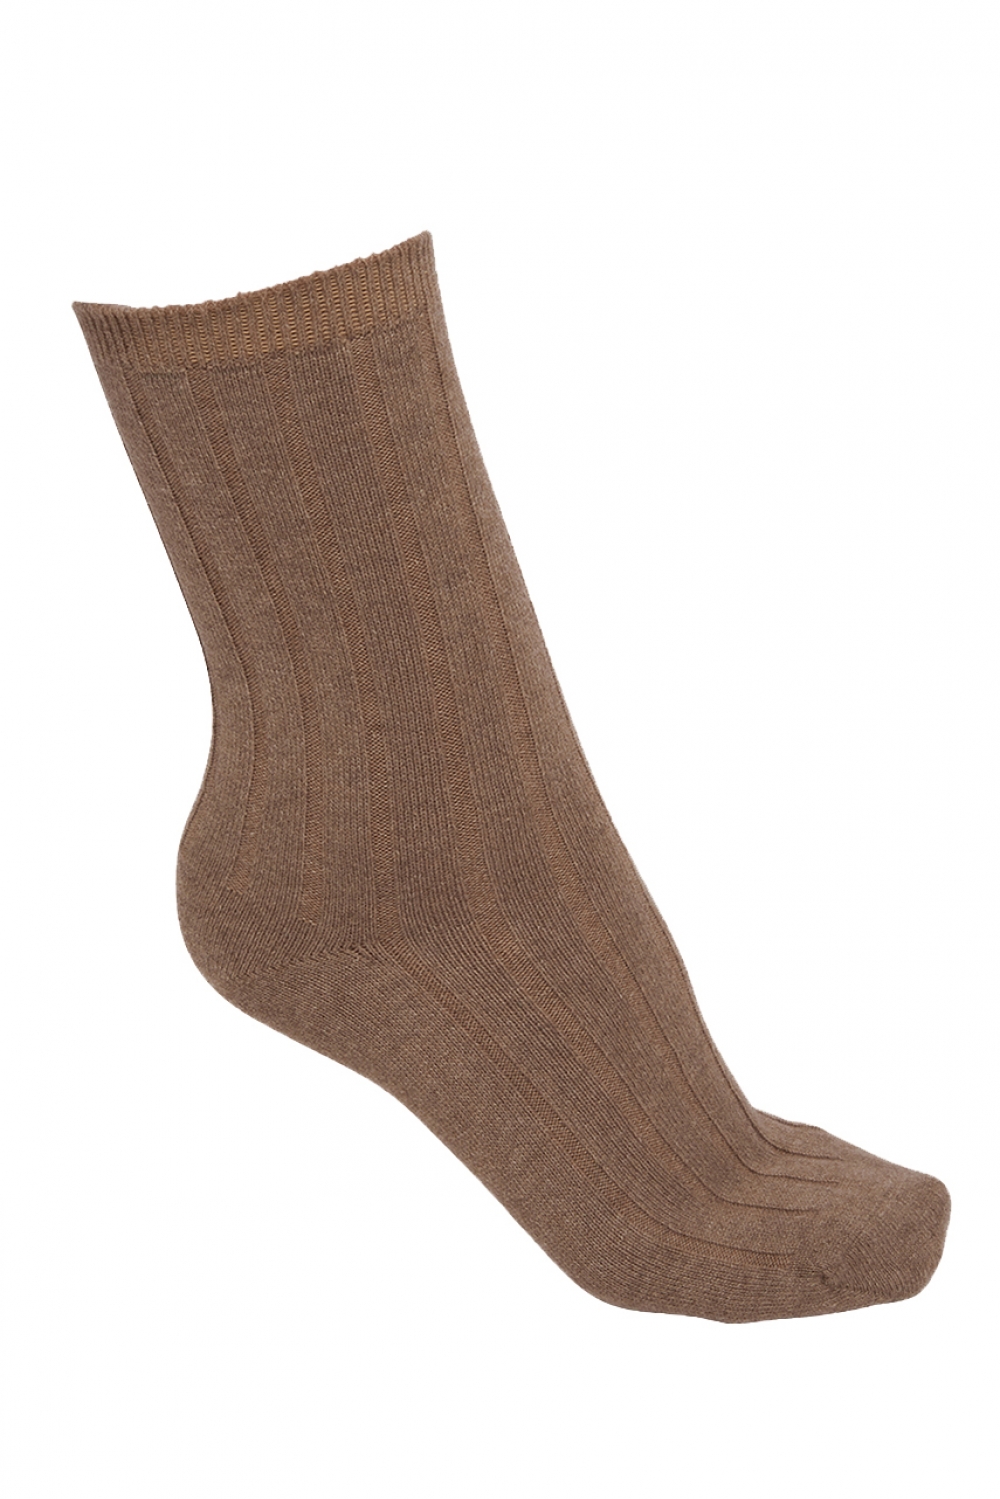 Cashmere & Elastaan accessoires sokken dragibus w natural brown 35 38